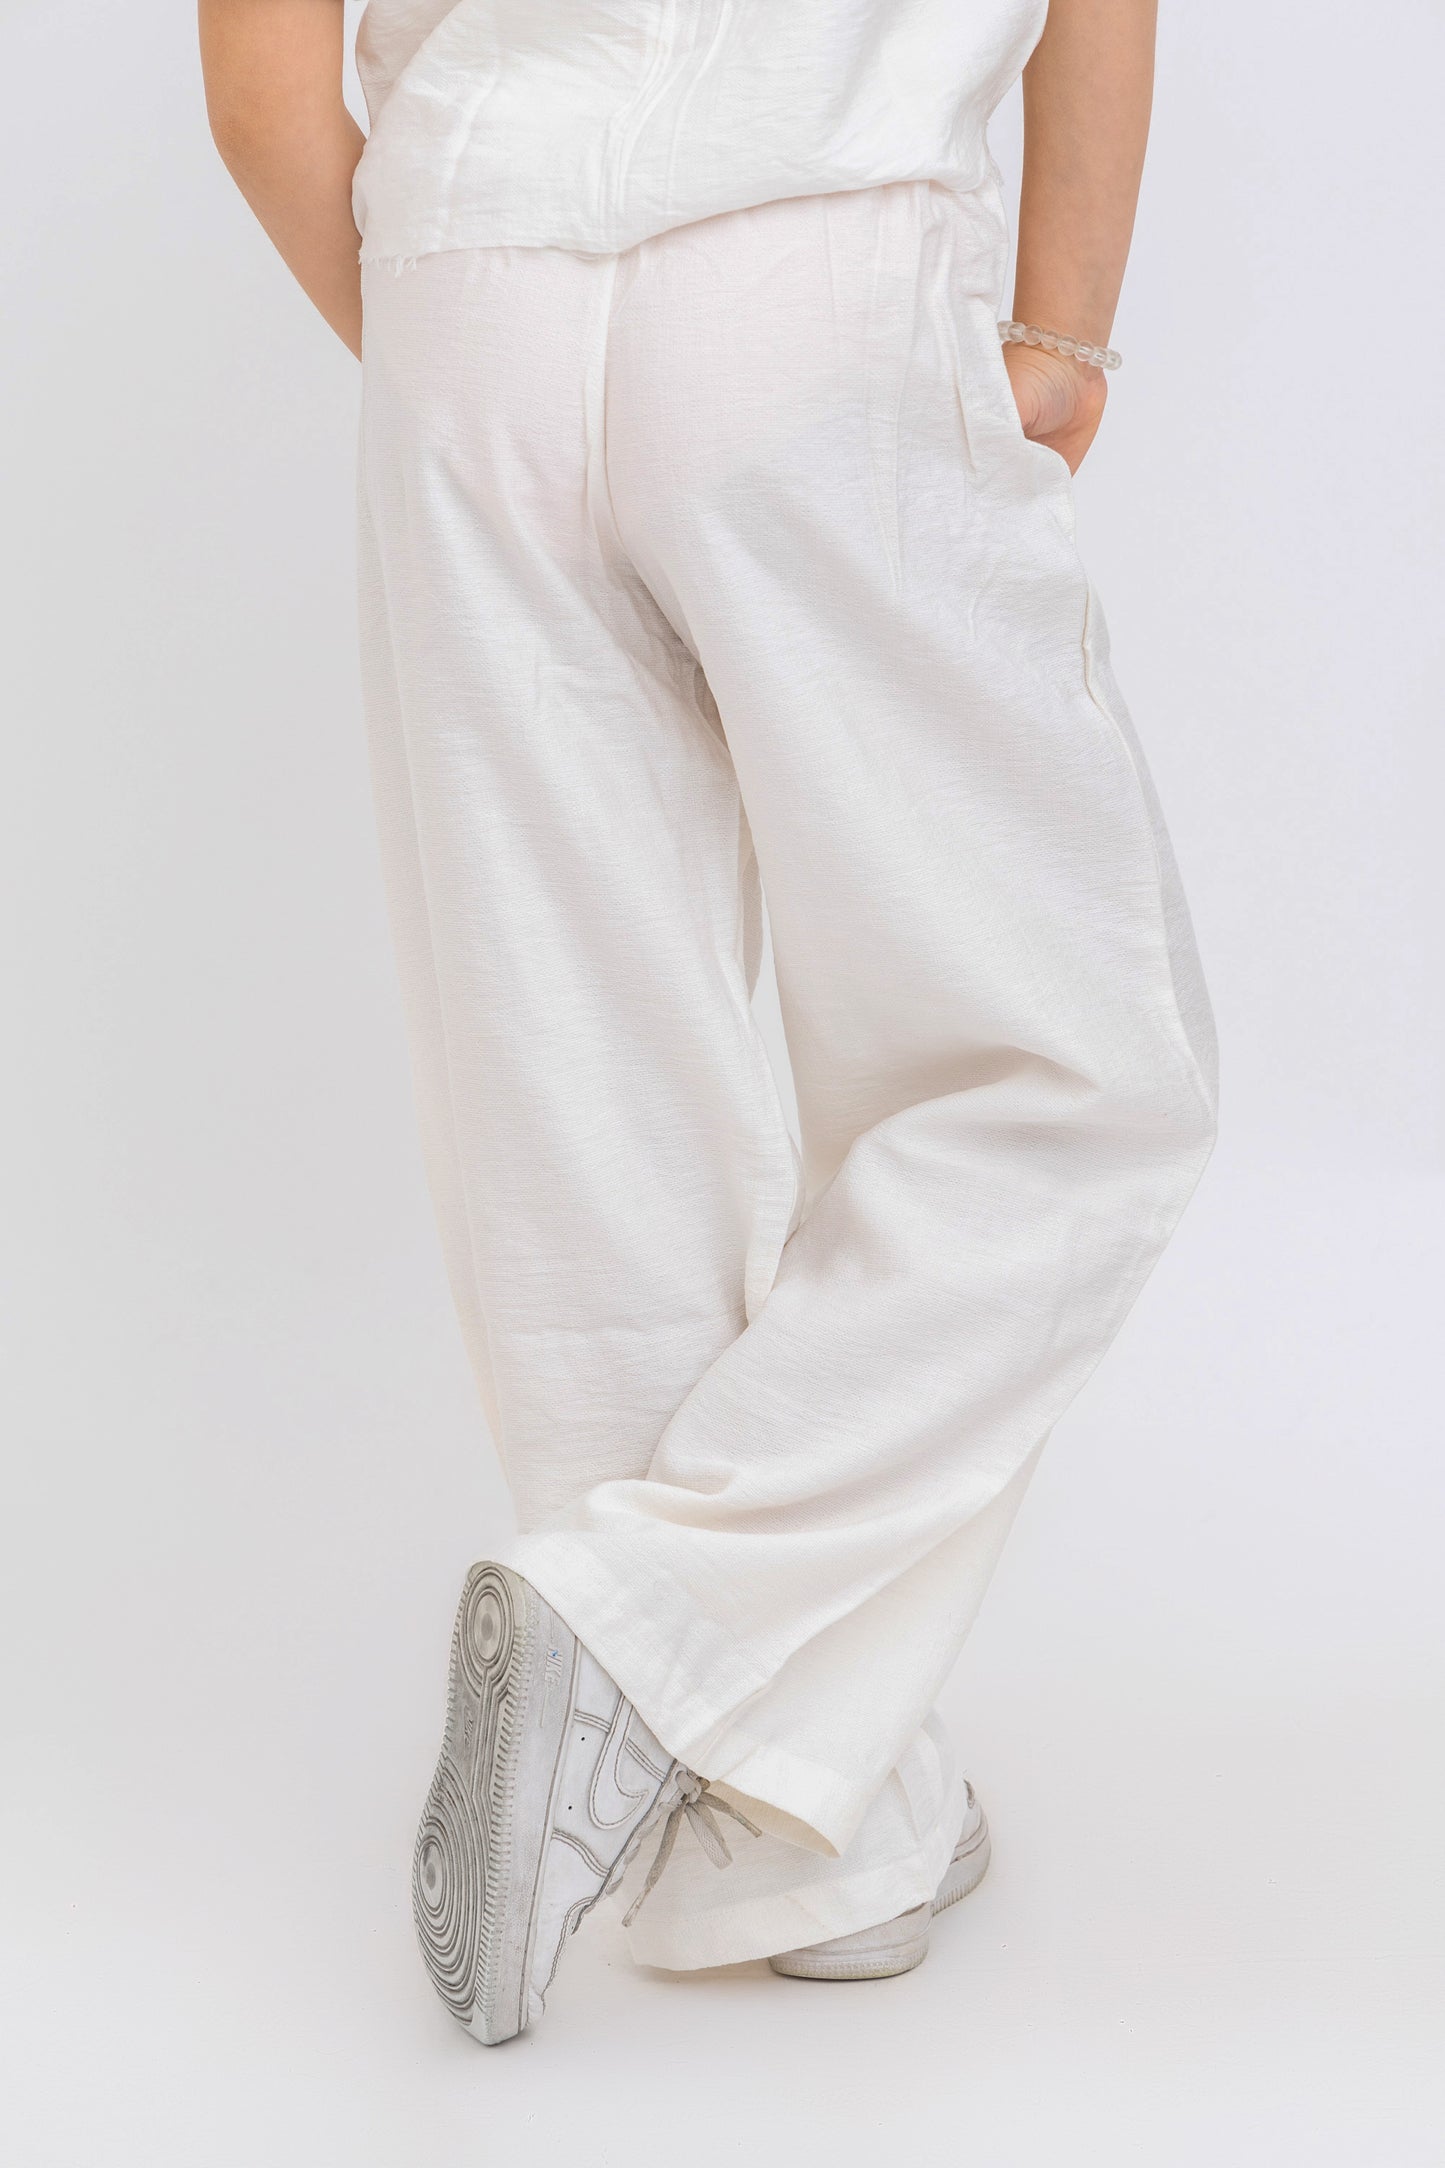 White Linen Pants